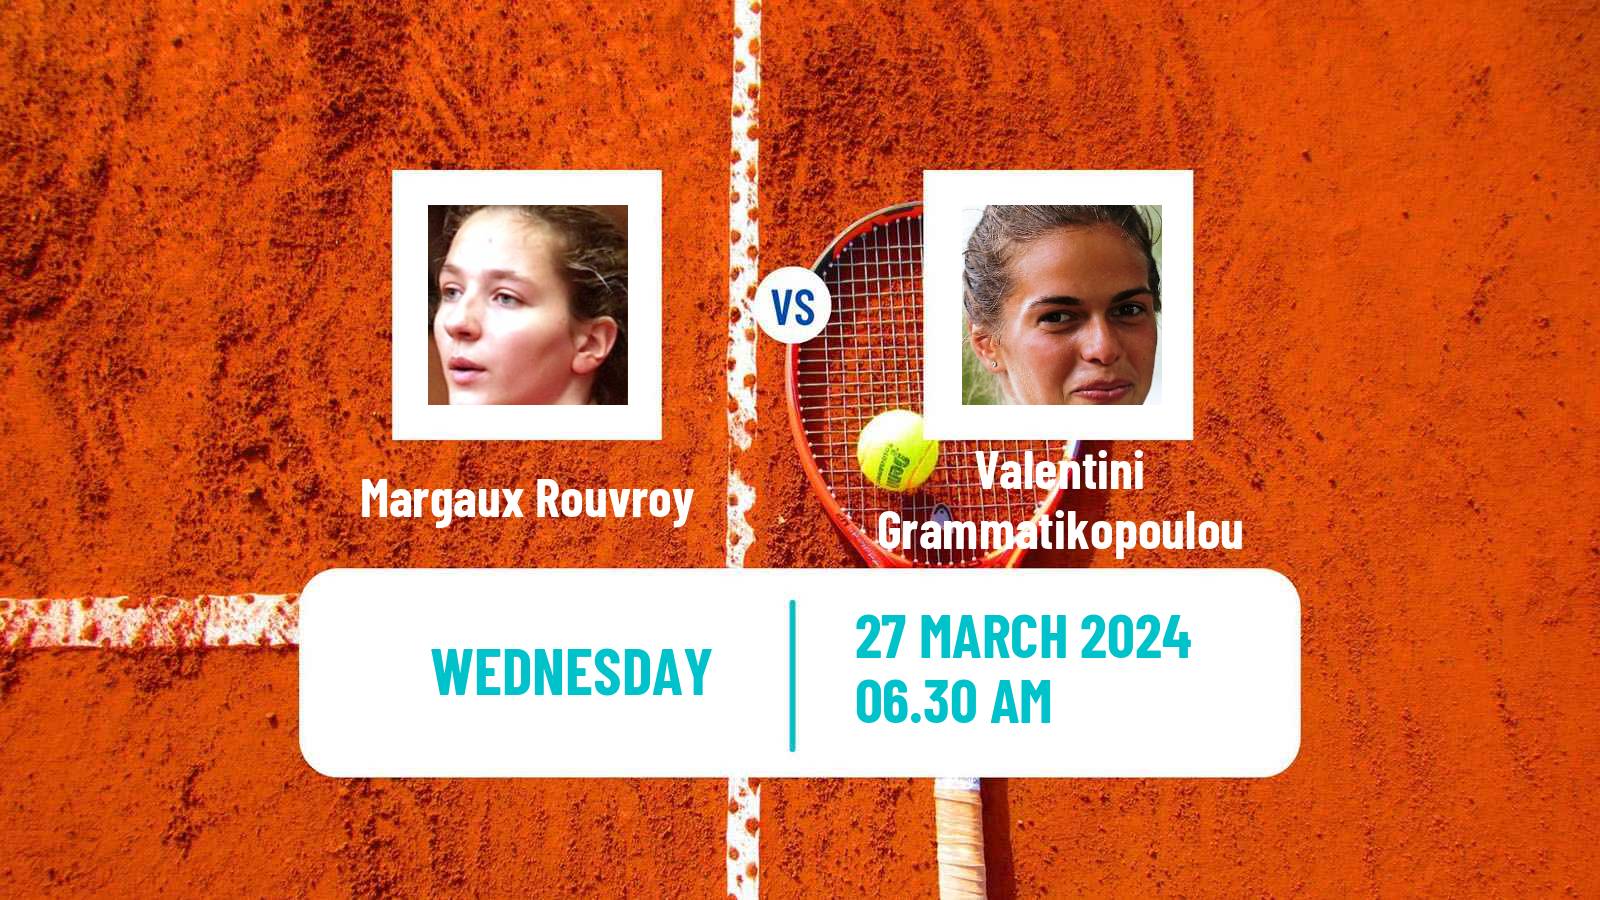 Tennis ITF W75 Croissy Beaubourg Women Margaux Rouvroy - Valentini Grammatikopoulou